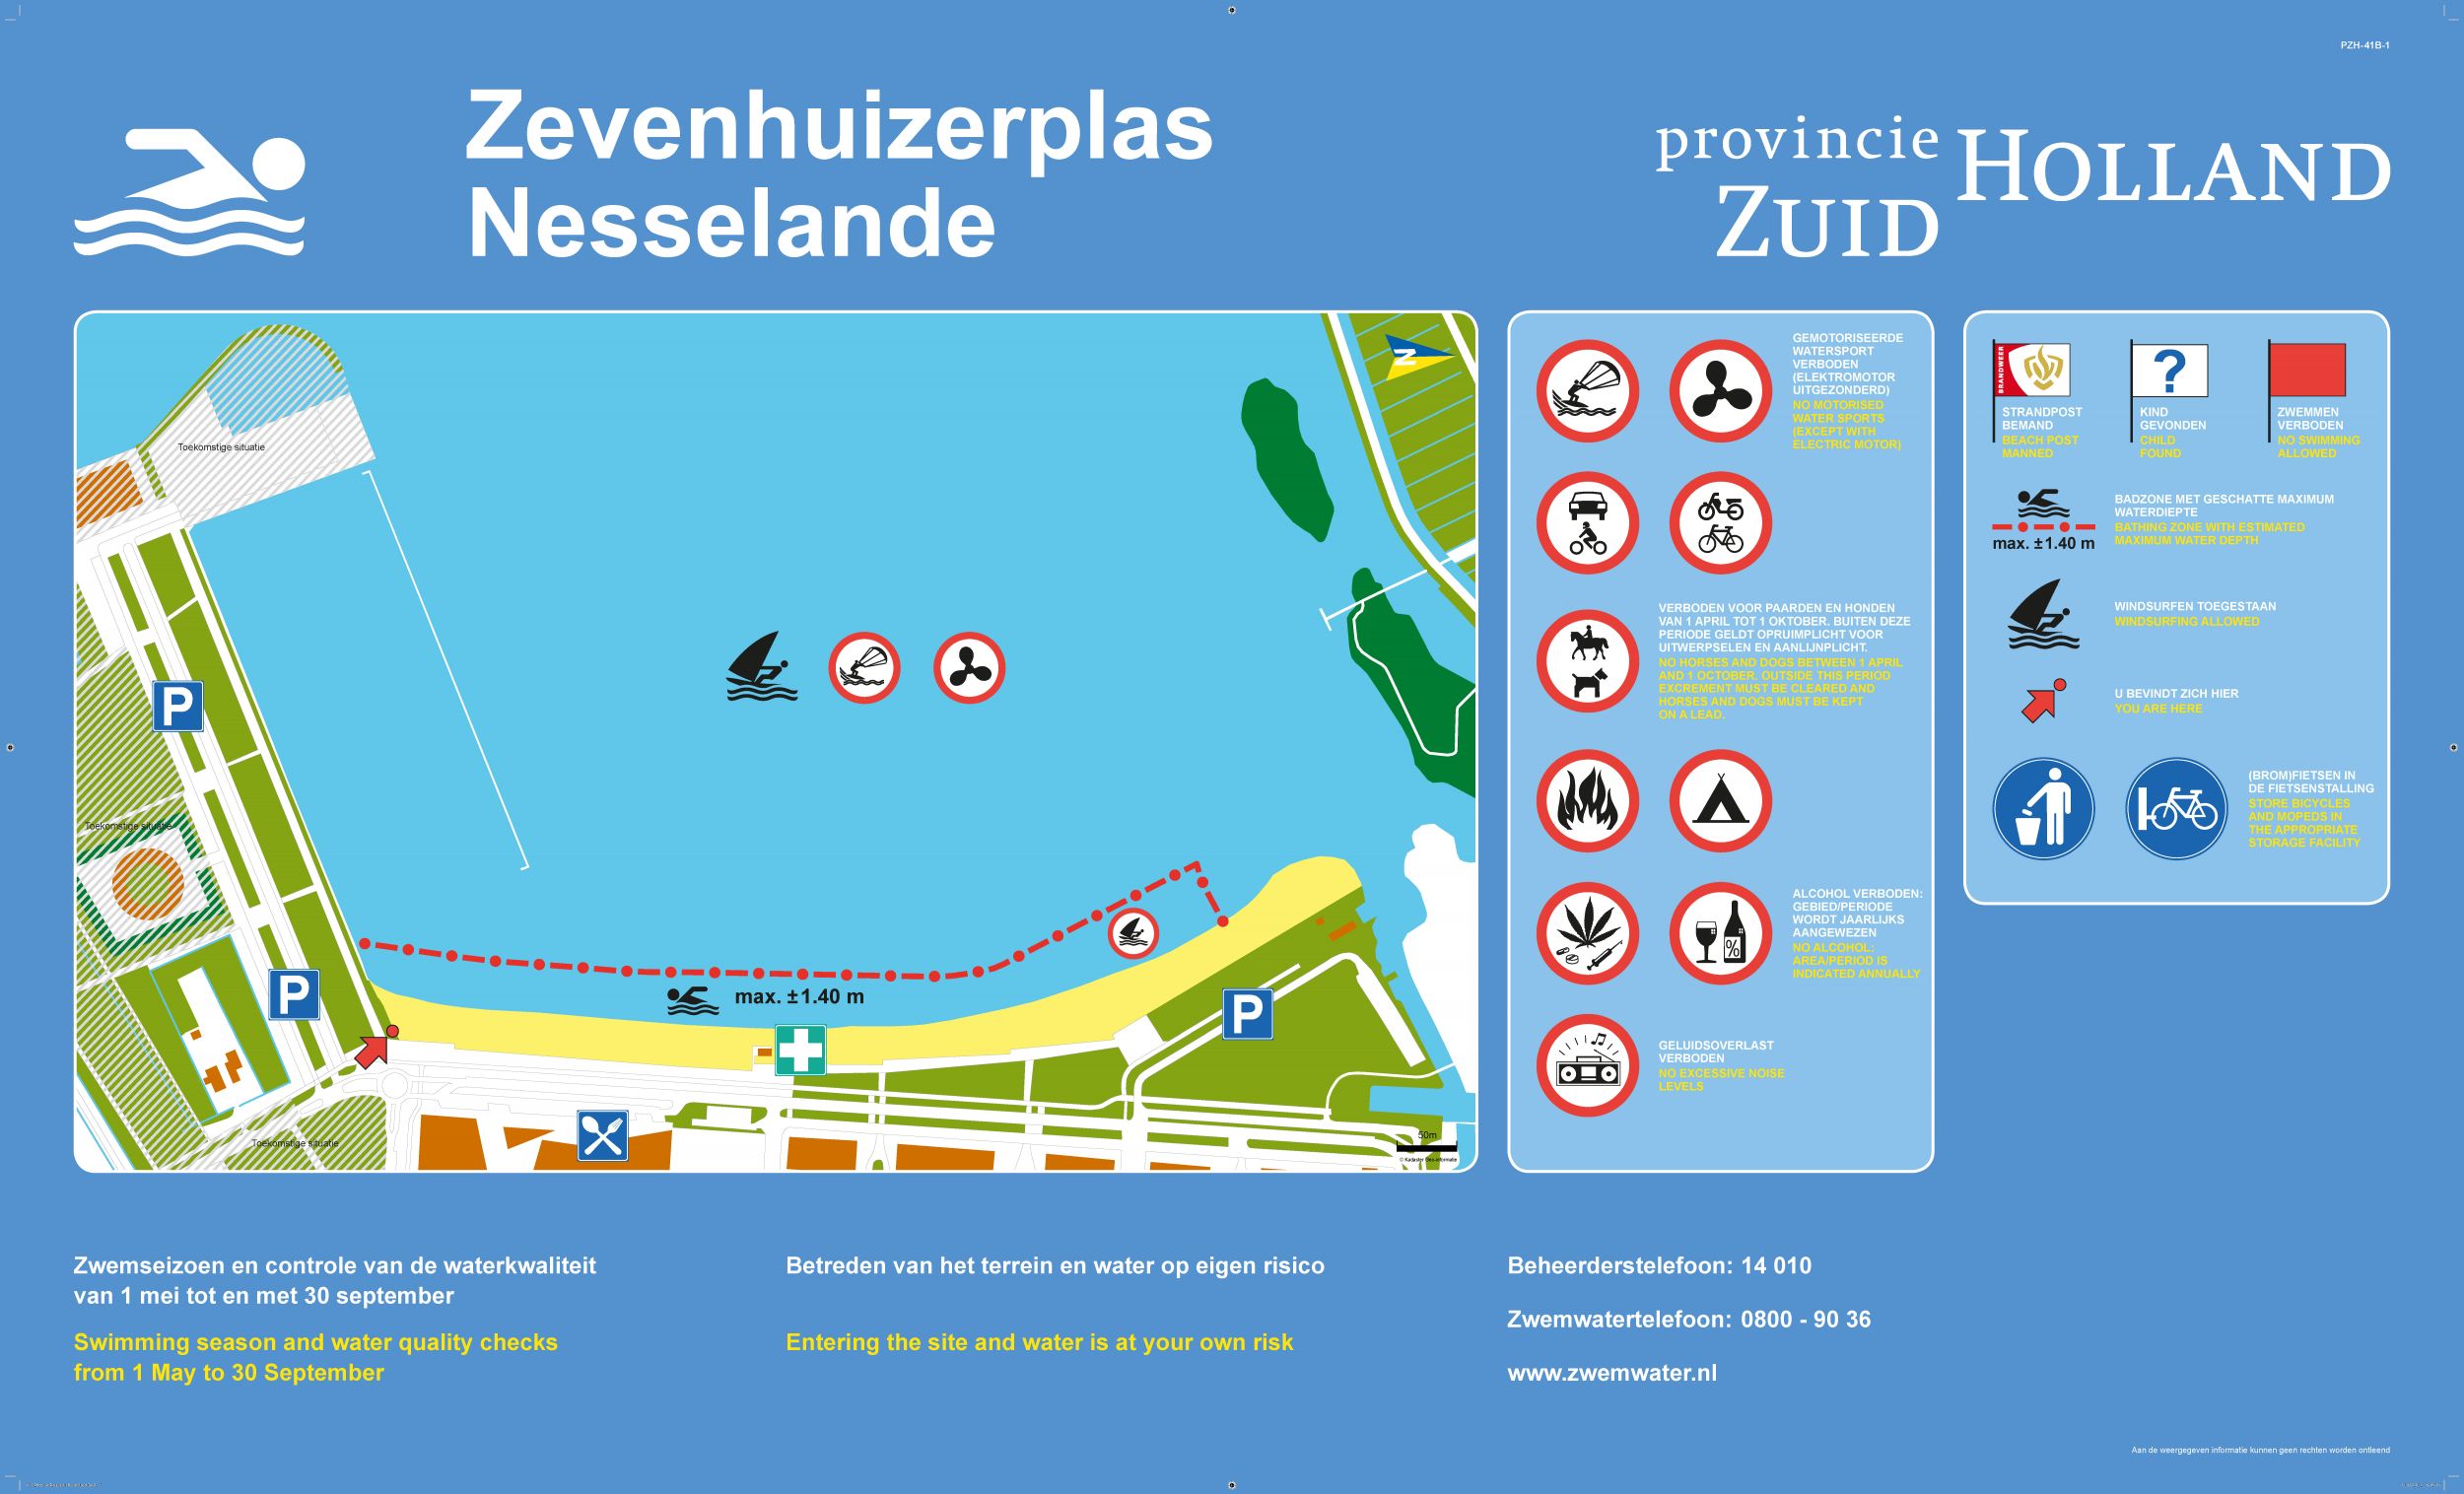 The information board at the swimming location Zevenhuizerplas Nesselande